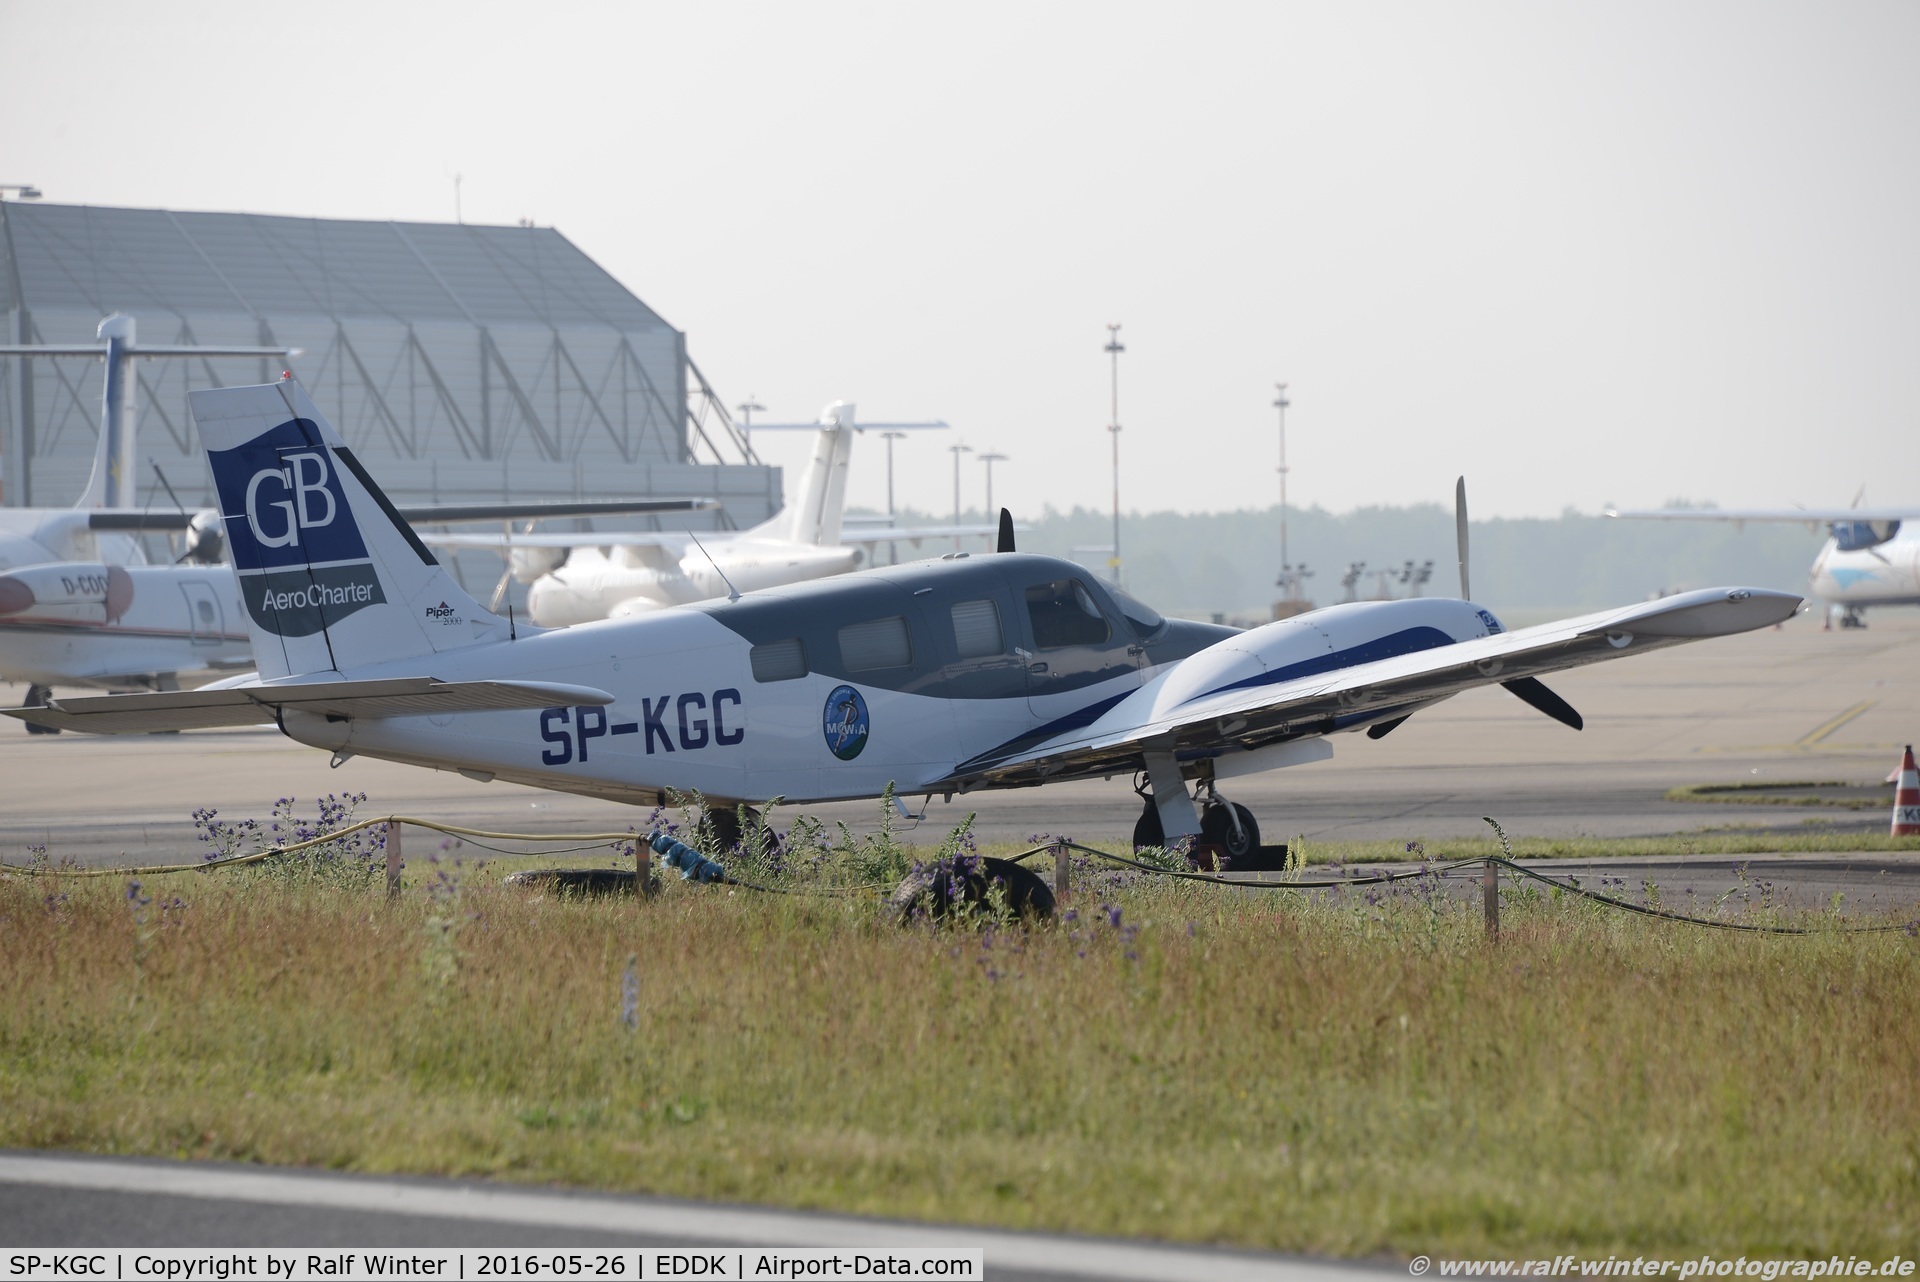 SP-KGC, Piper PA-34-220T Seneca V C/N 34-49194, Piper PA-34-220T Seneca V - GB AeroCharter - 3449194 - SP-KGC - 26.05.2016 - CGN